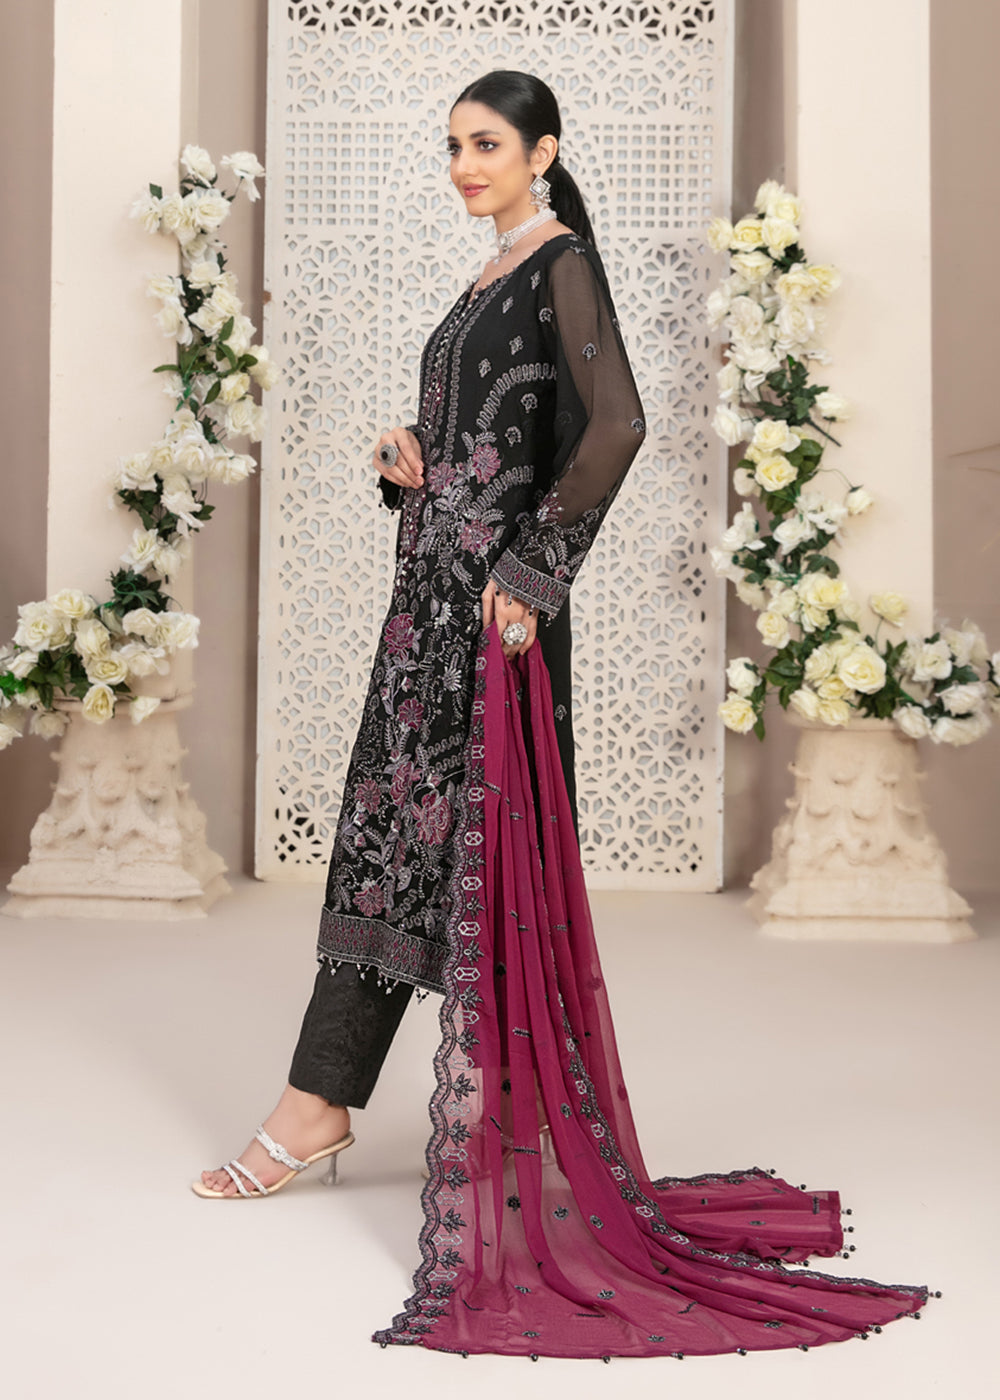 Buy Now Nayara Formal Wear 2023 by Tawakkal Fabrics - D-8684 Online in USA, UK, Canada & Worldwide at Empress Clothing.